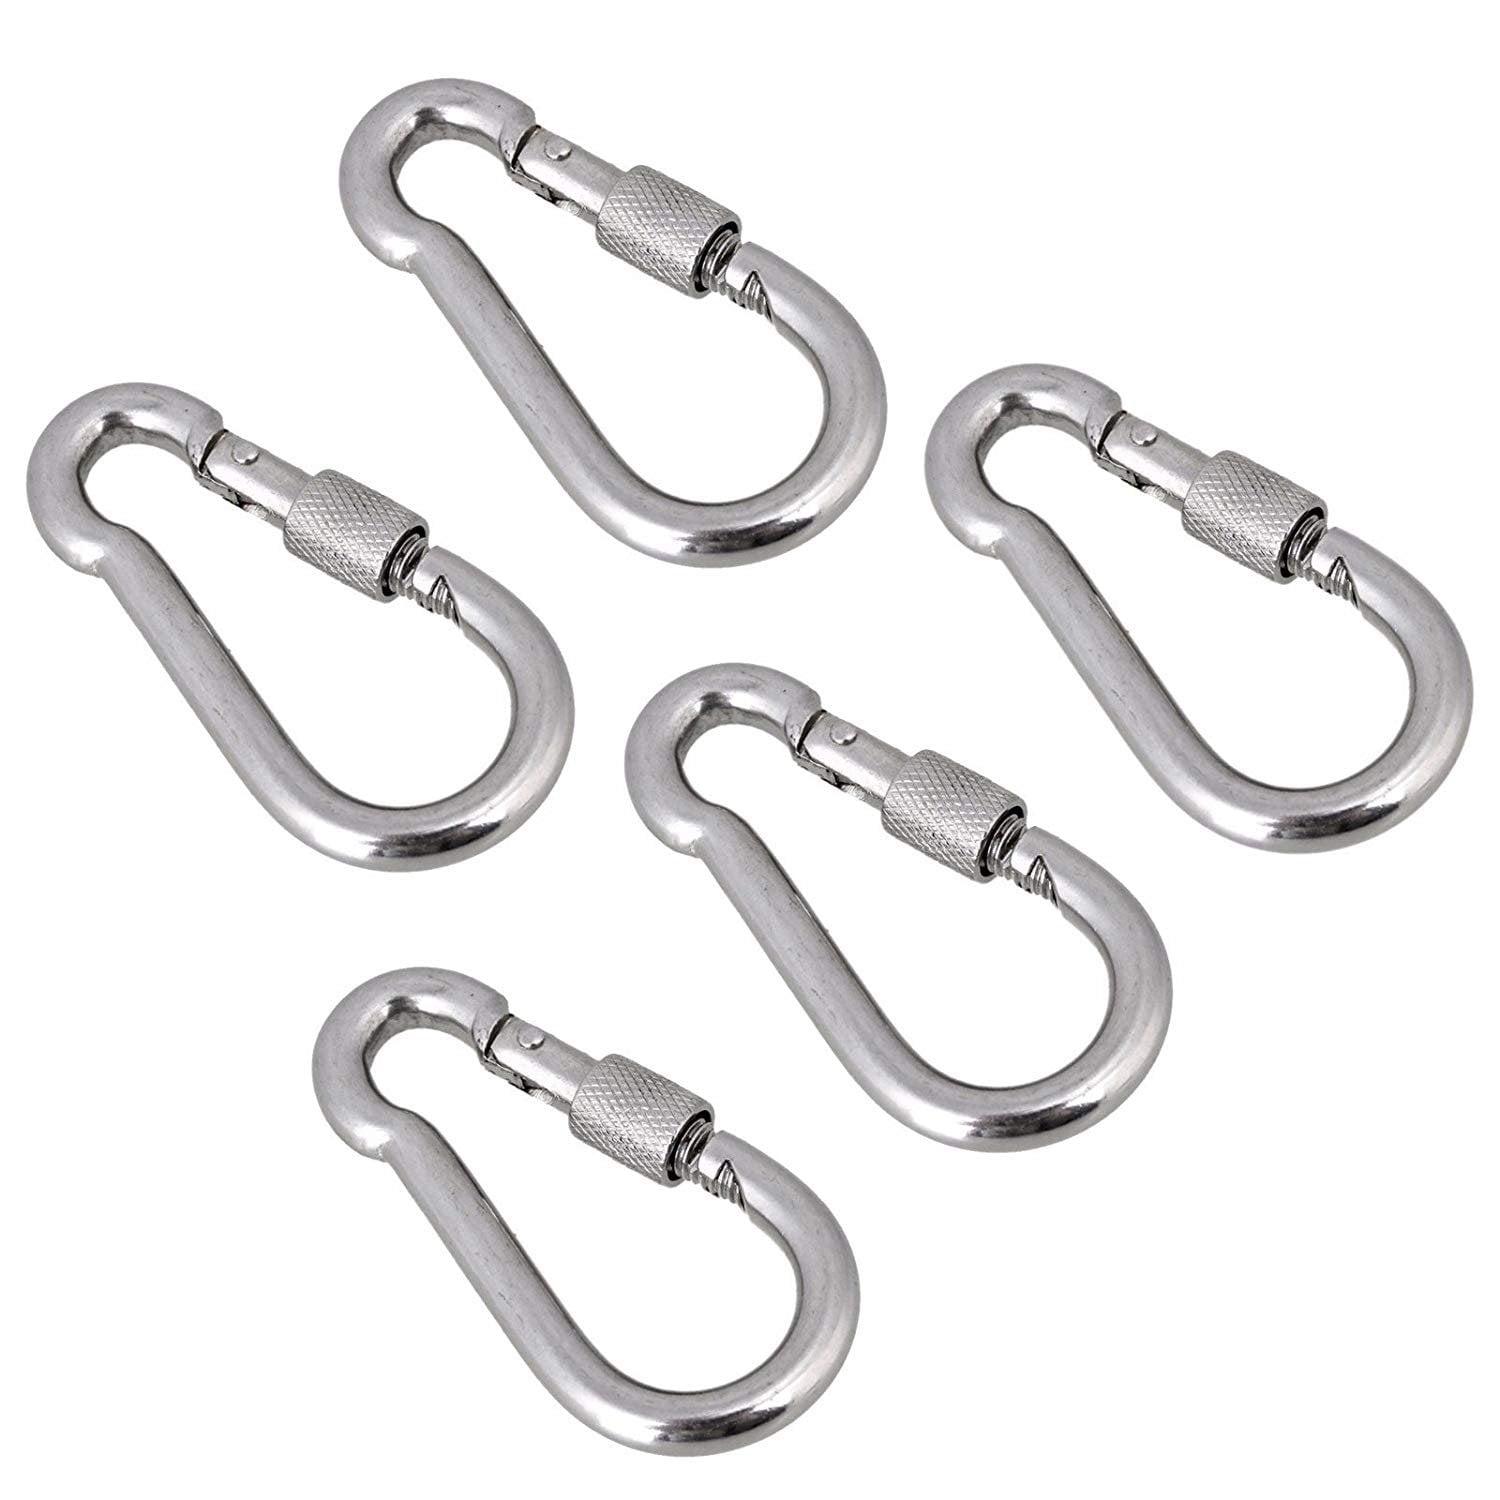 Wideskall 3.5 Heavy Duty Metal Screw Lock Carabiner Hook Snap Clip D-Ring  Chrome Silver - Pack of 5 